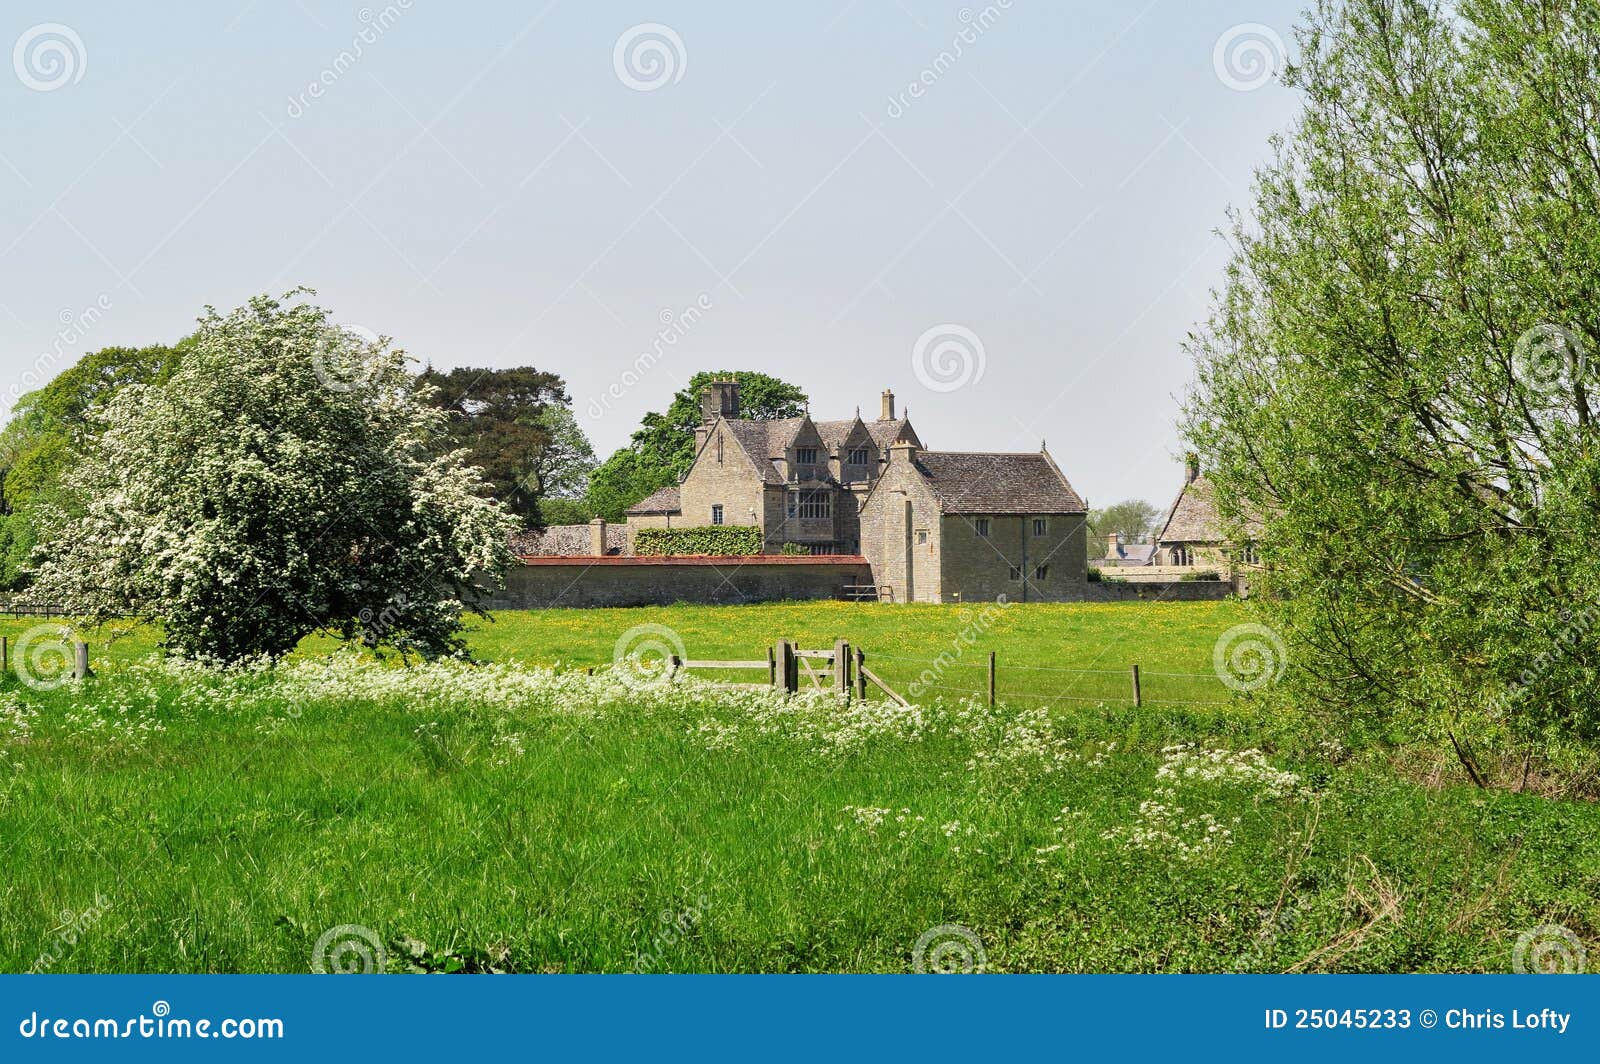 medieval manor farmhouse in rural england